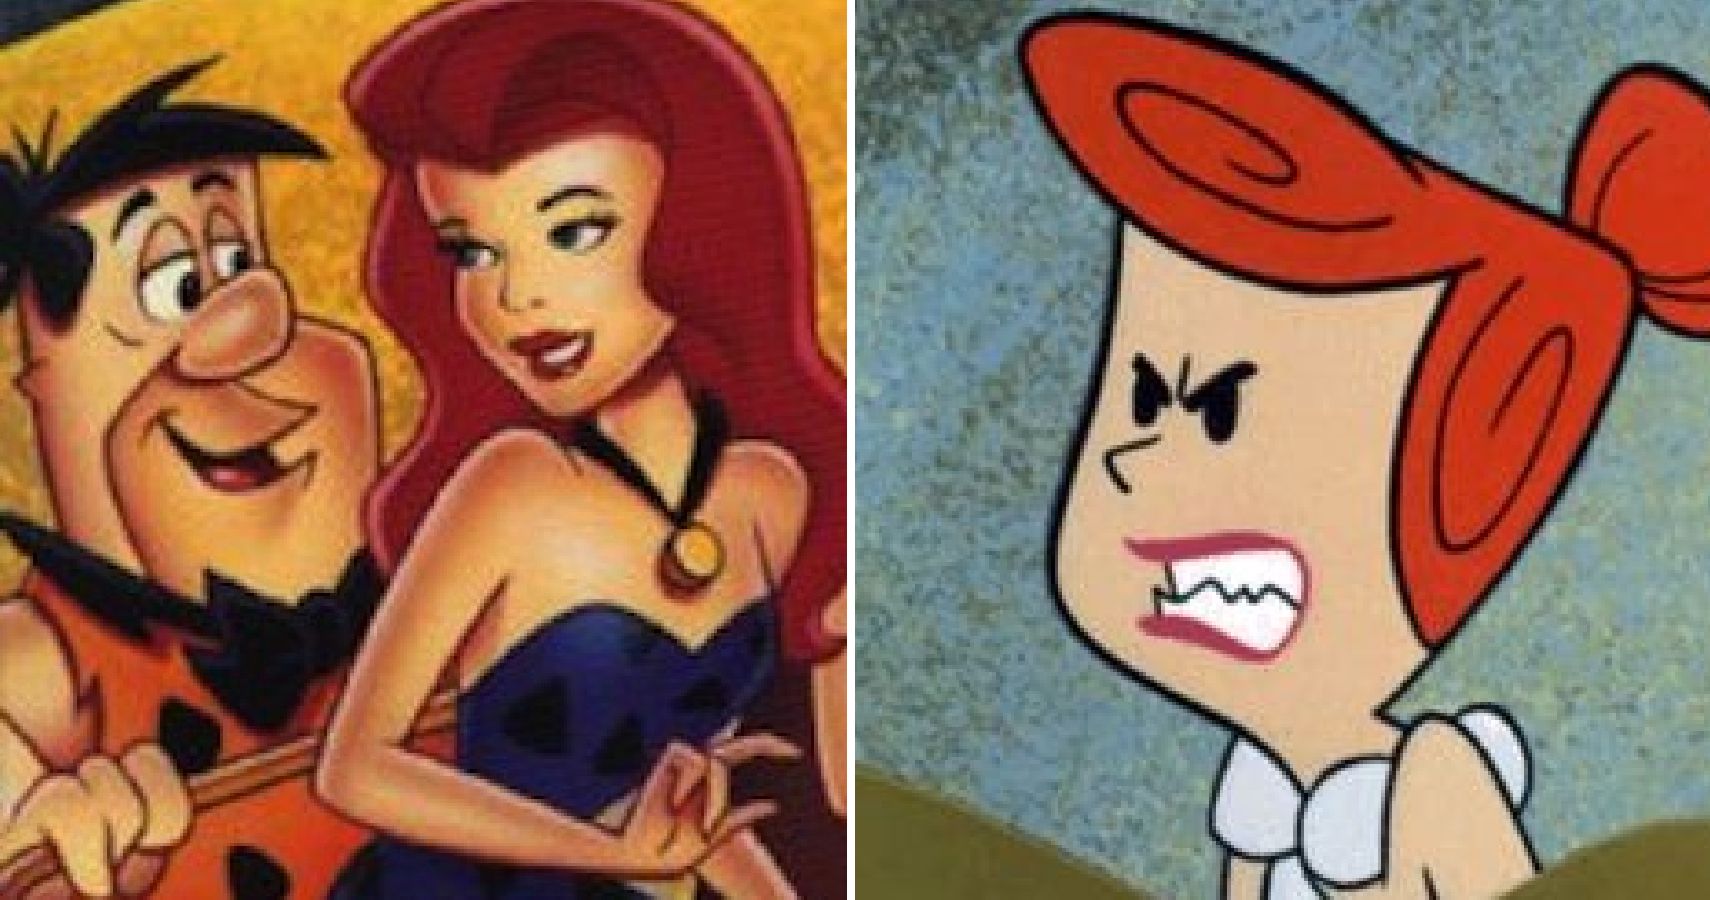 25 Cool Secrets You Never Knew About The Flintstones